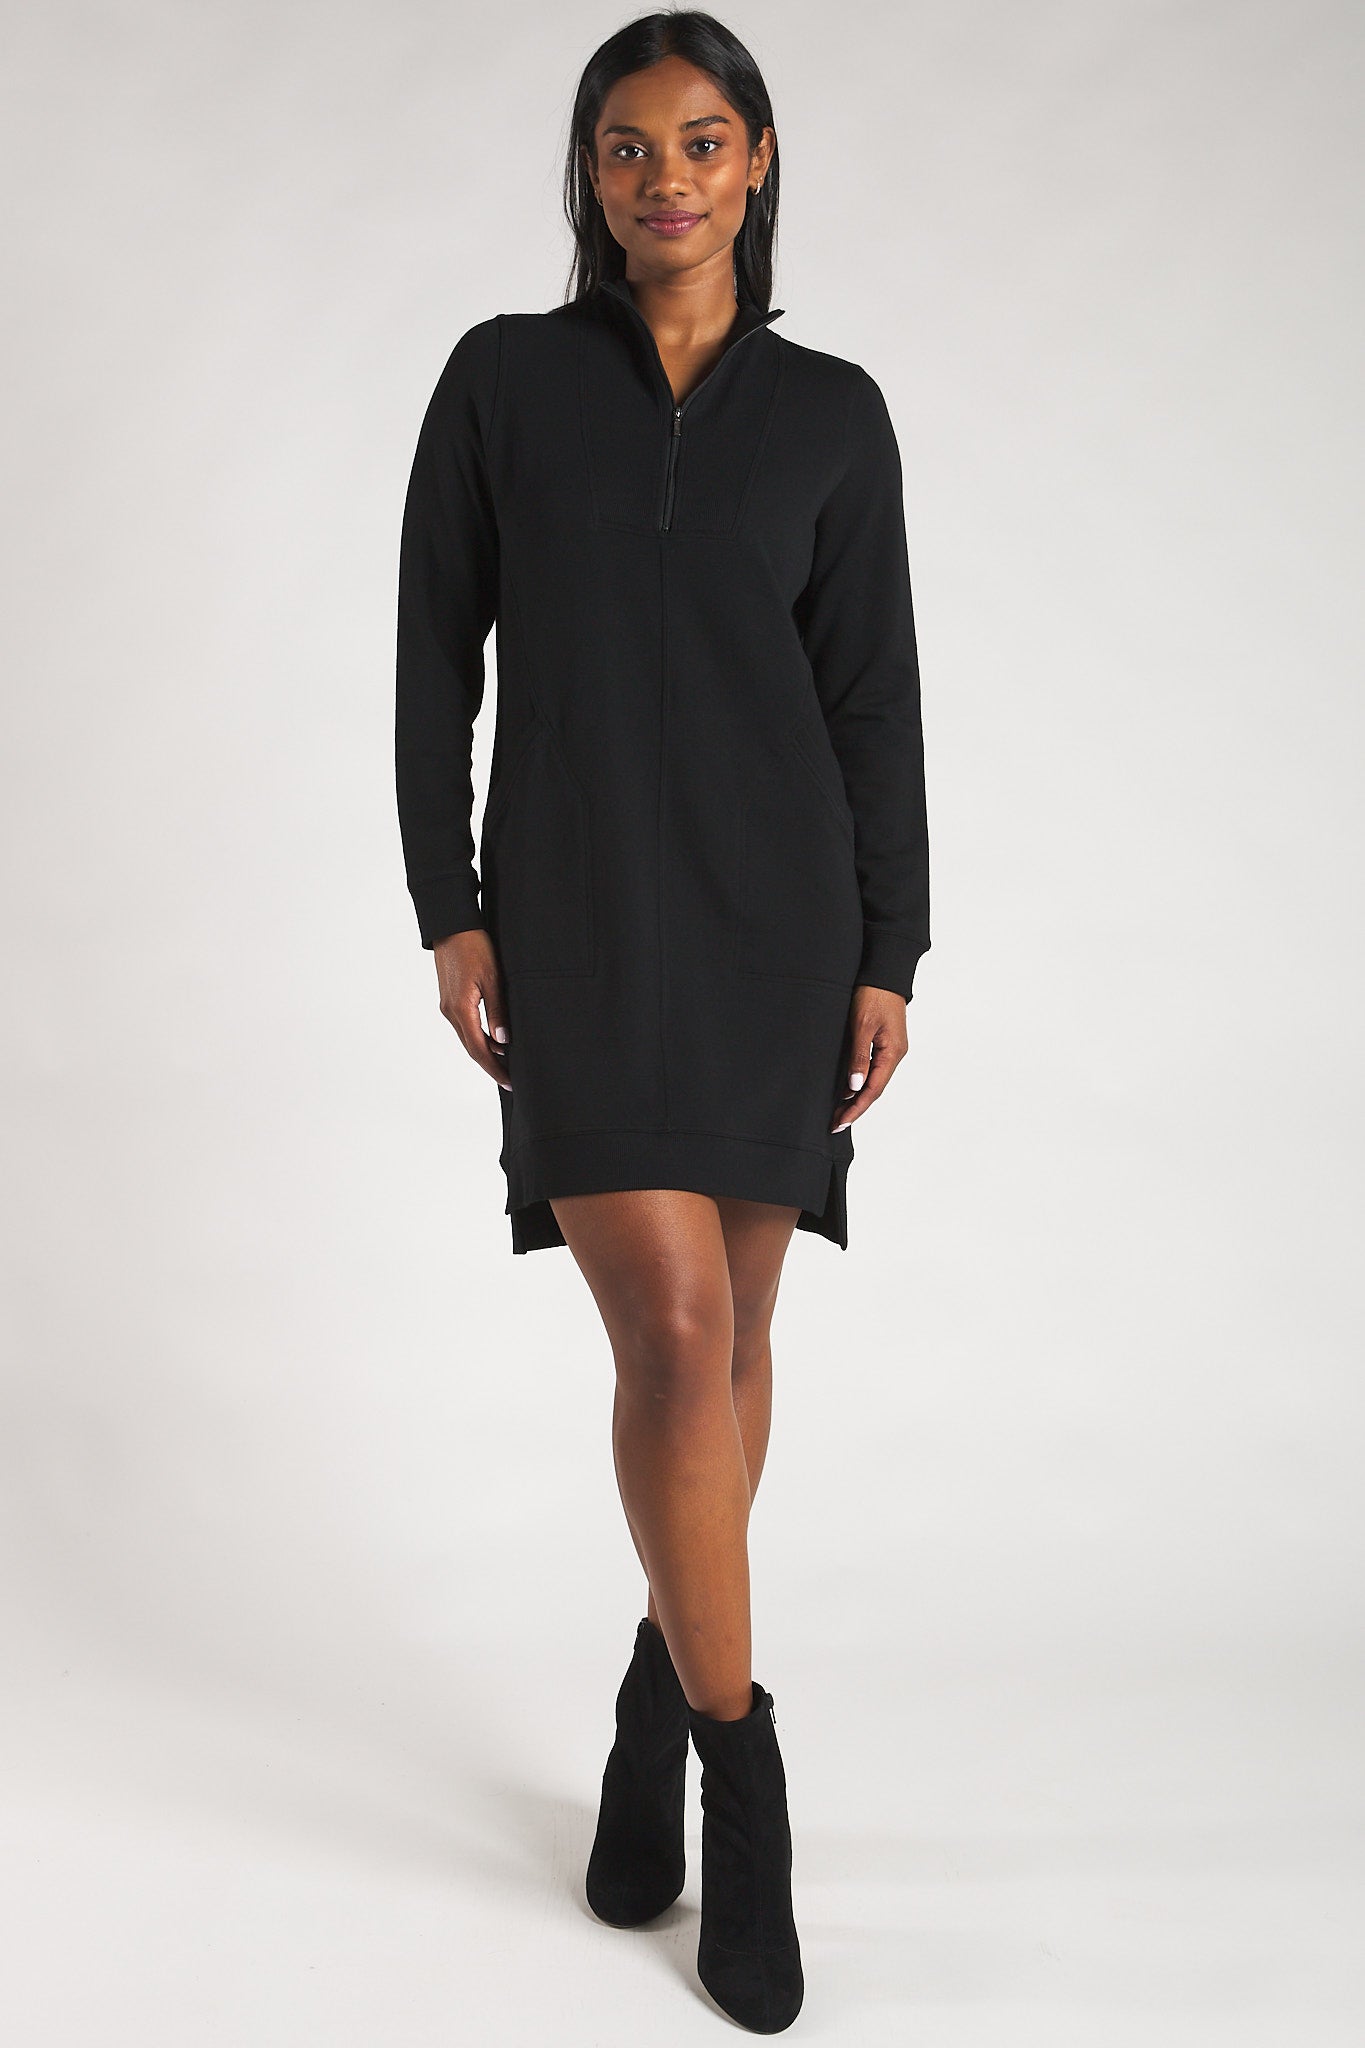 Women’s black half-zip sweater dress made from sustainable bamboo fleece.